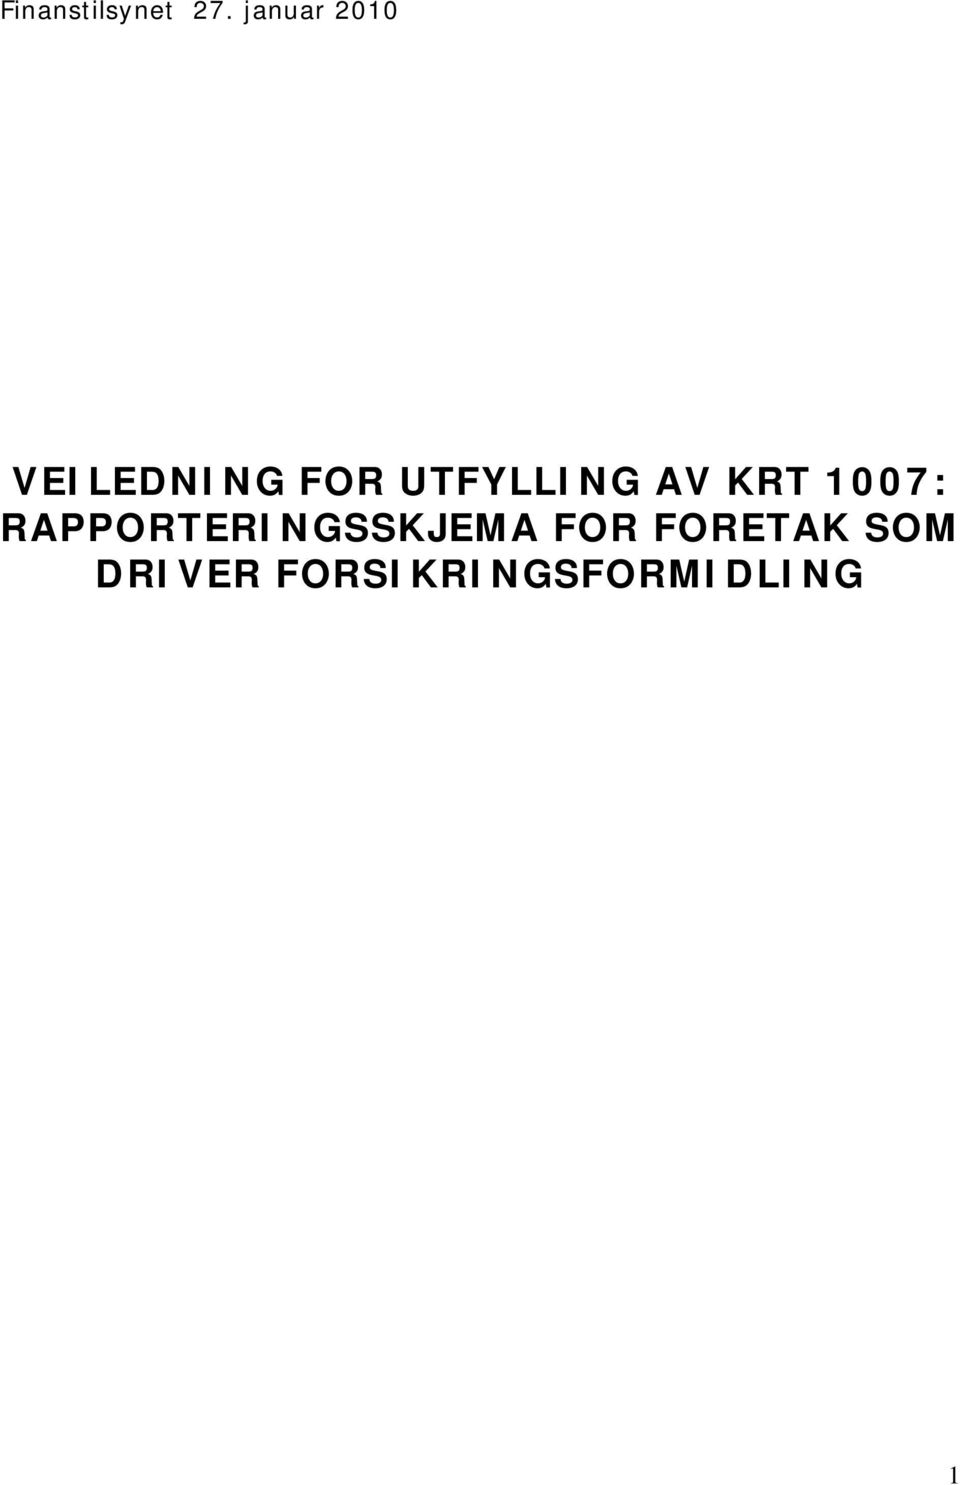 UTFYLLING AV KRT 1007: